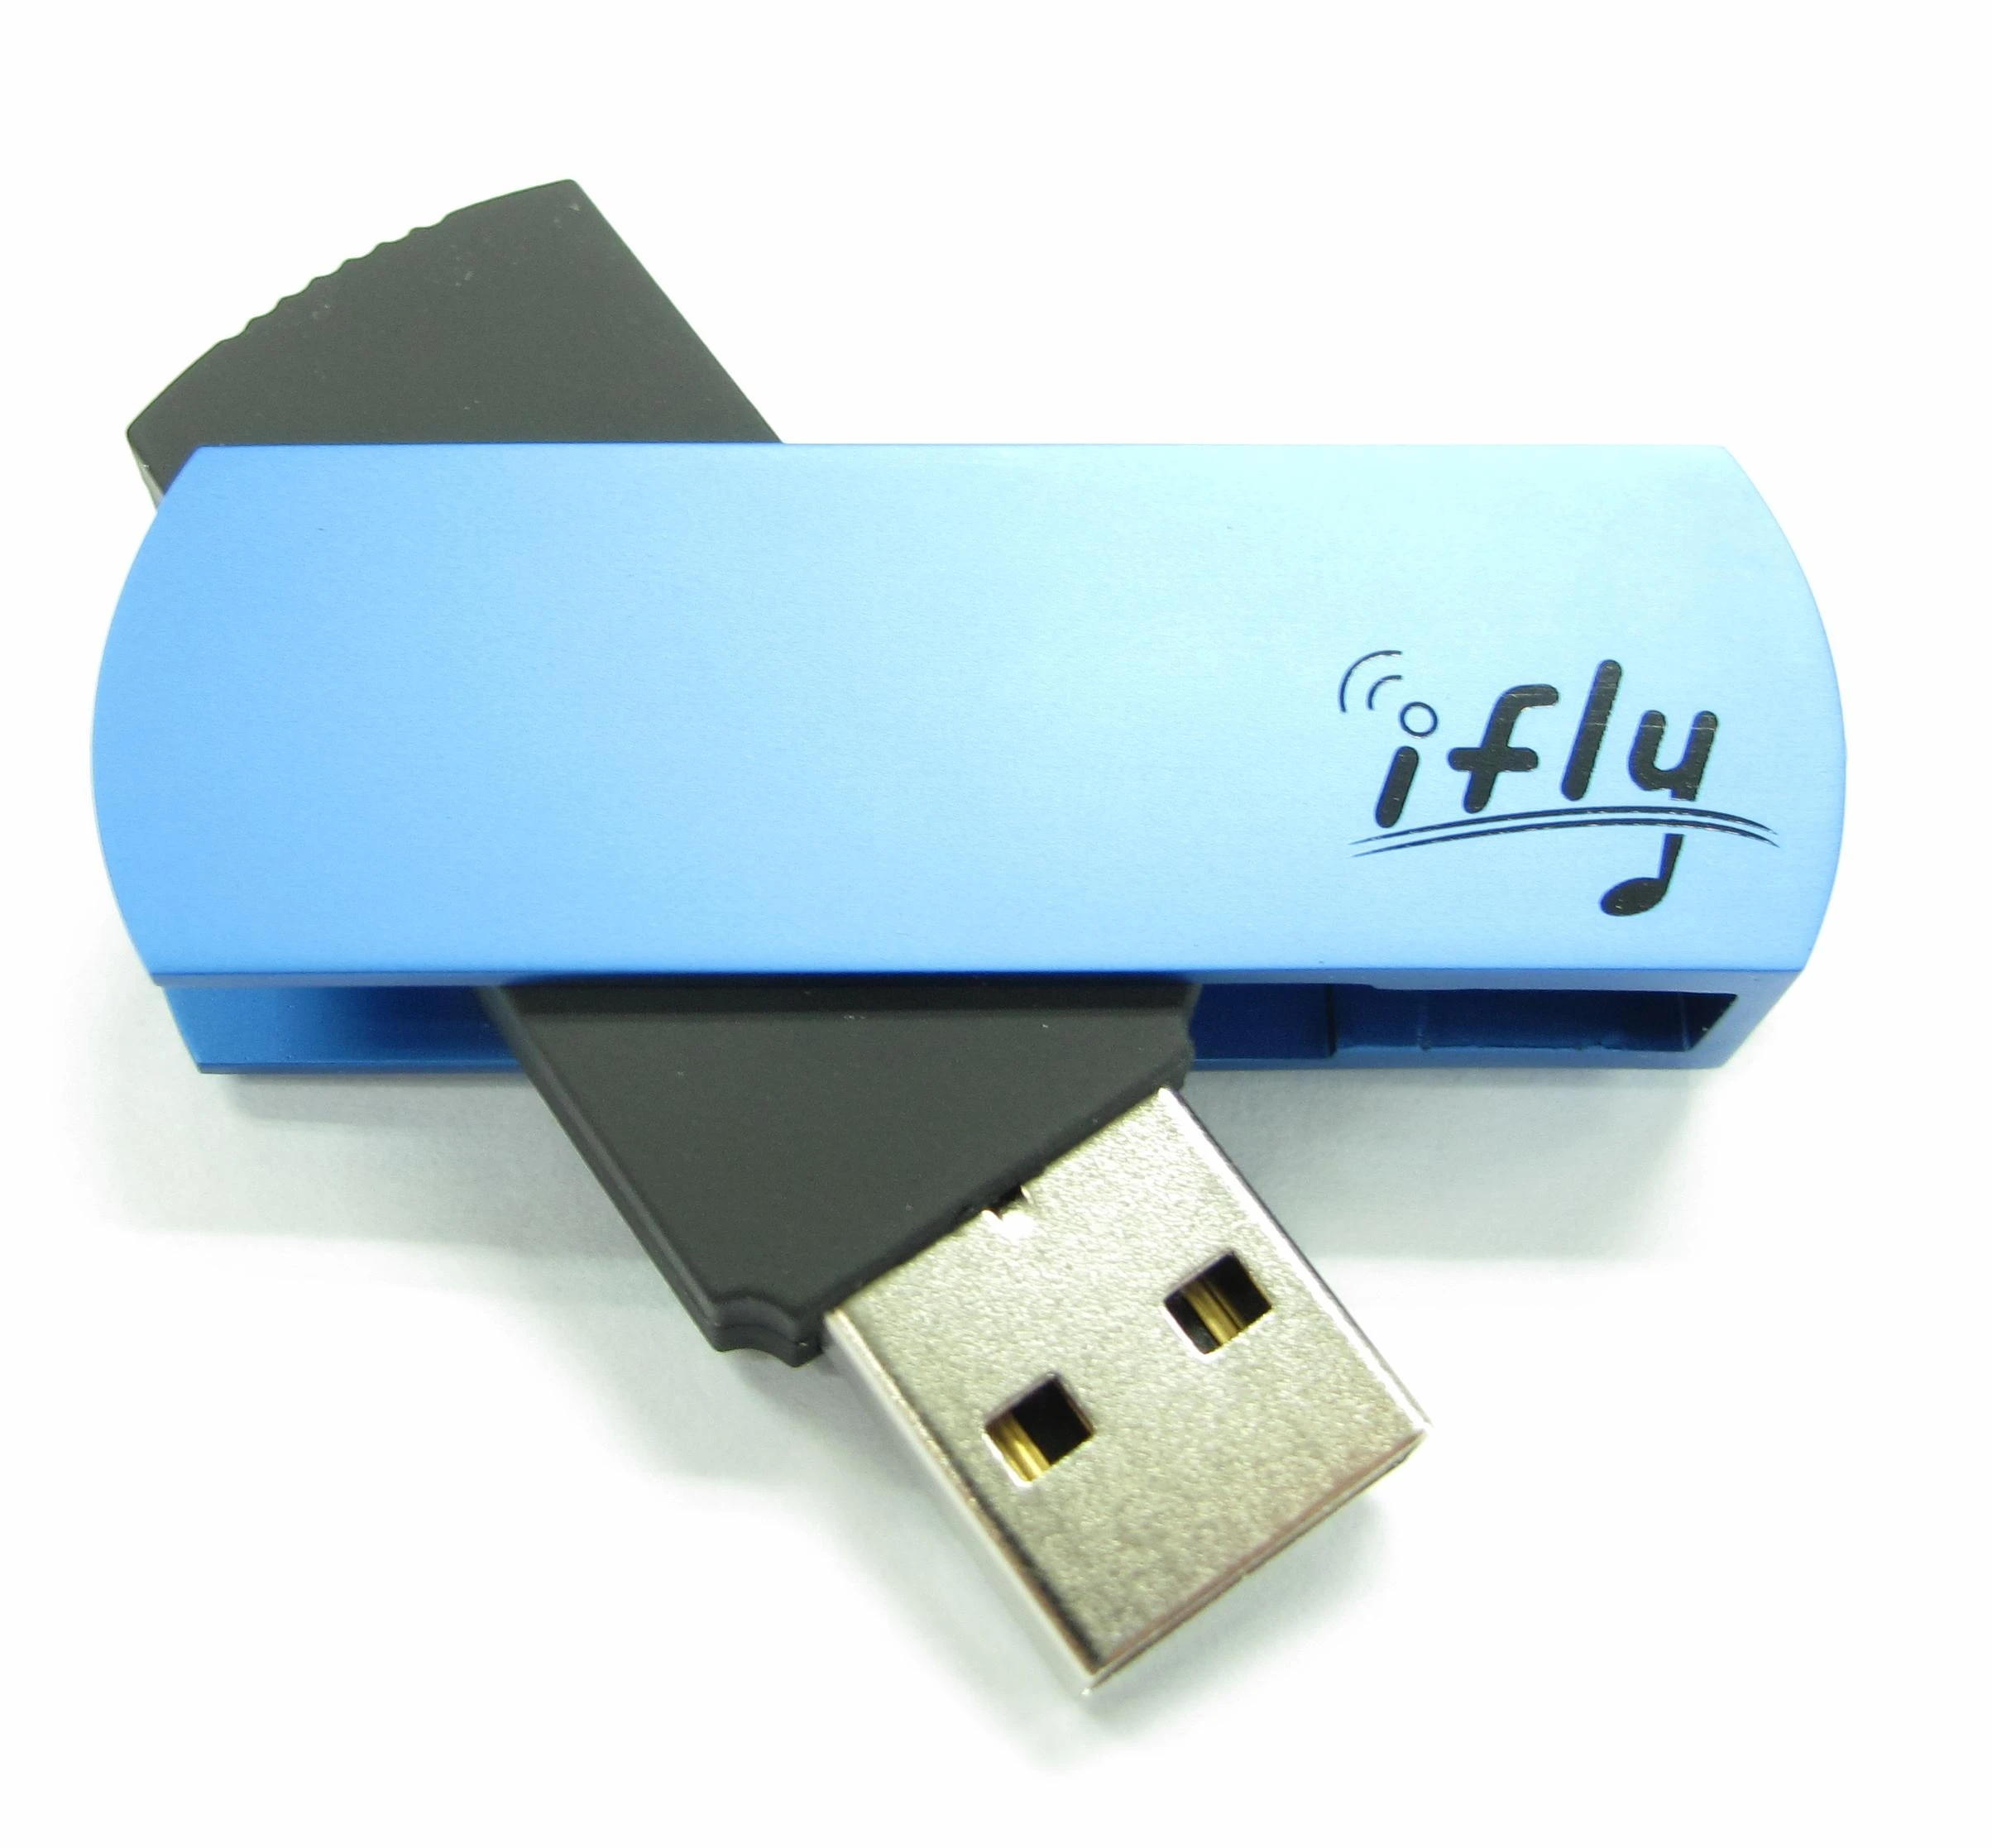 USB Media Player